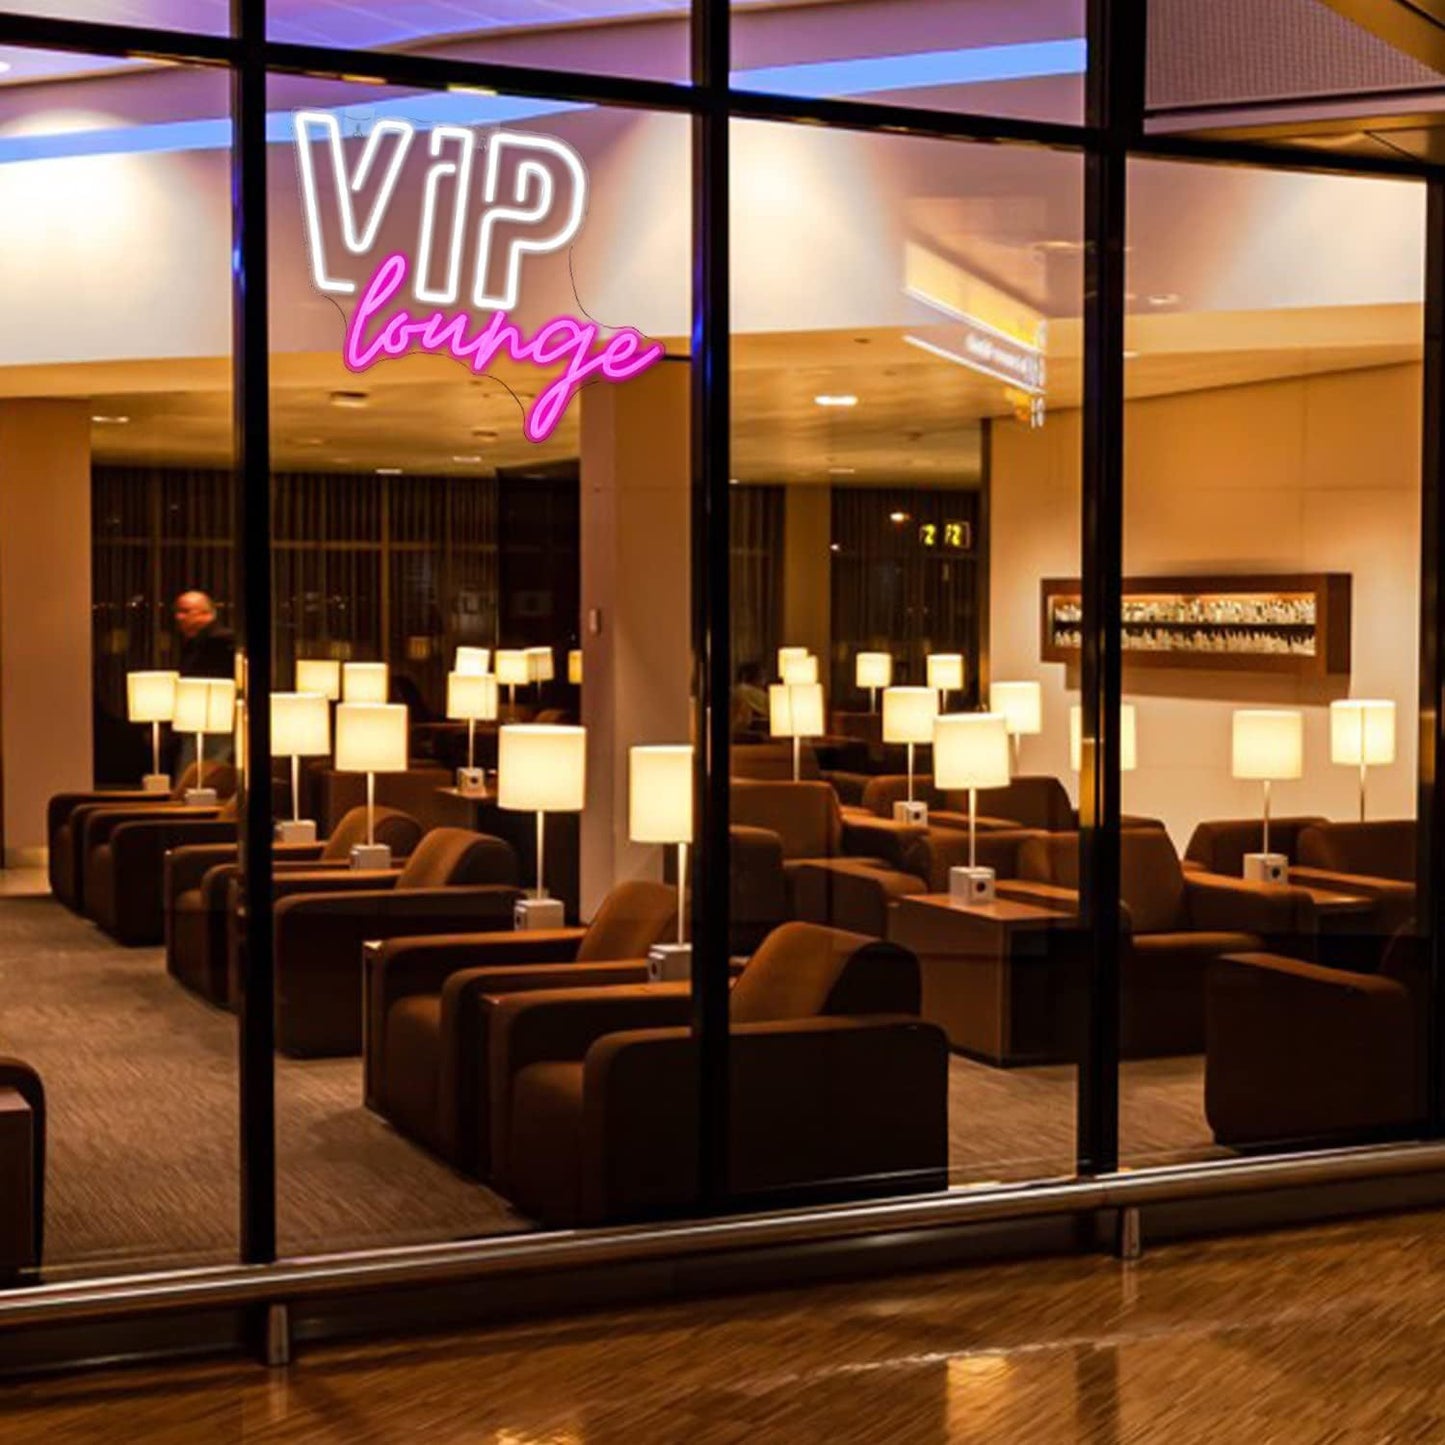 VIP Lounge Neon